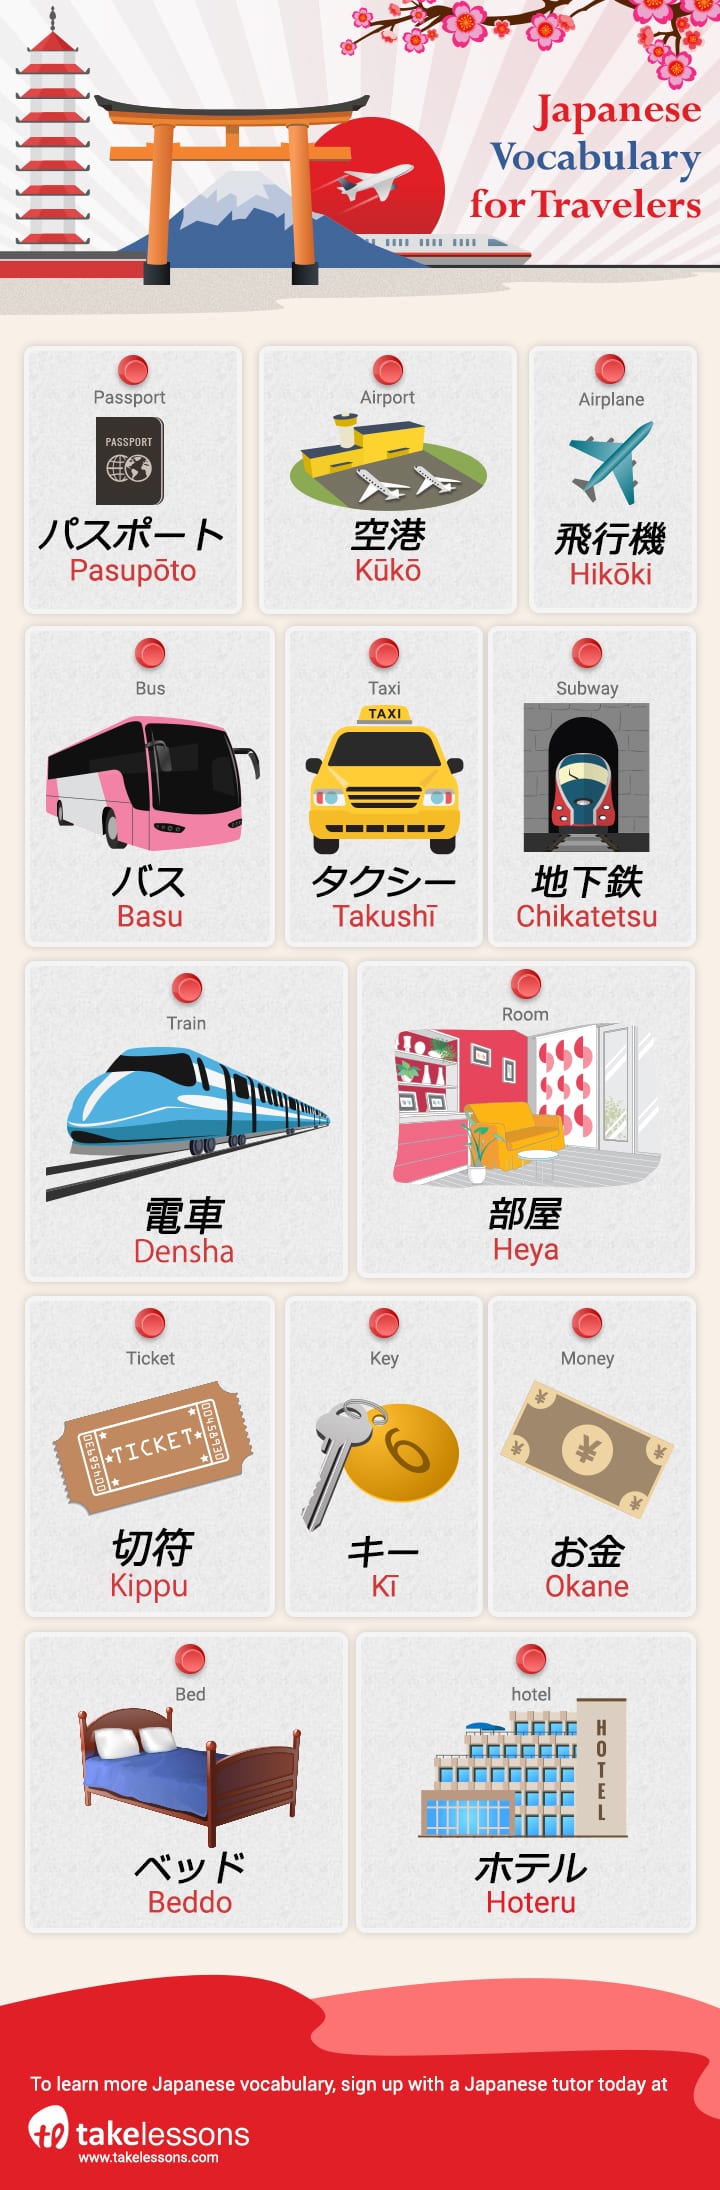 Japanese vocabulary for travelers